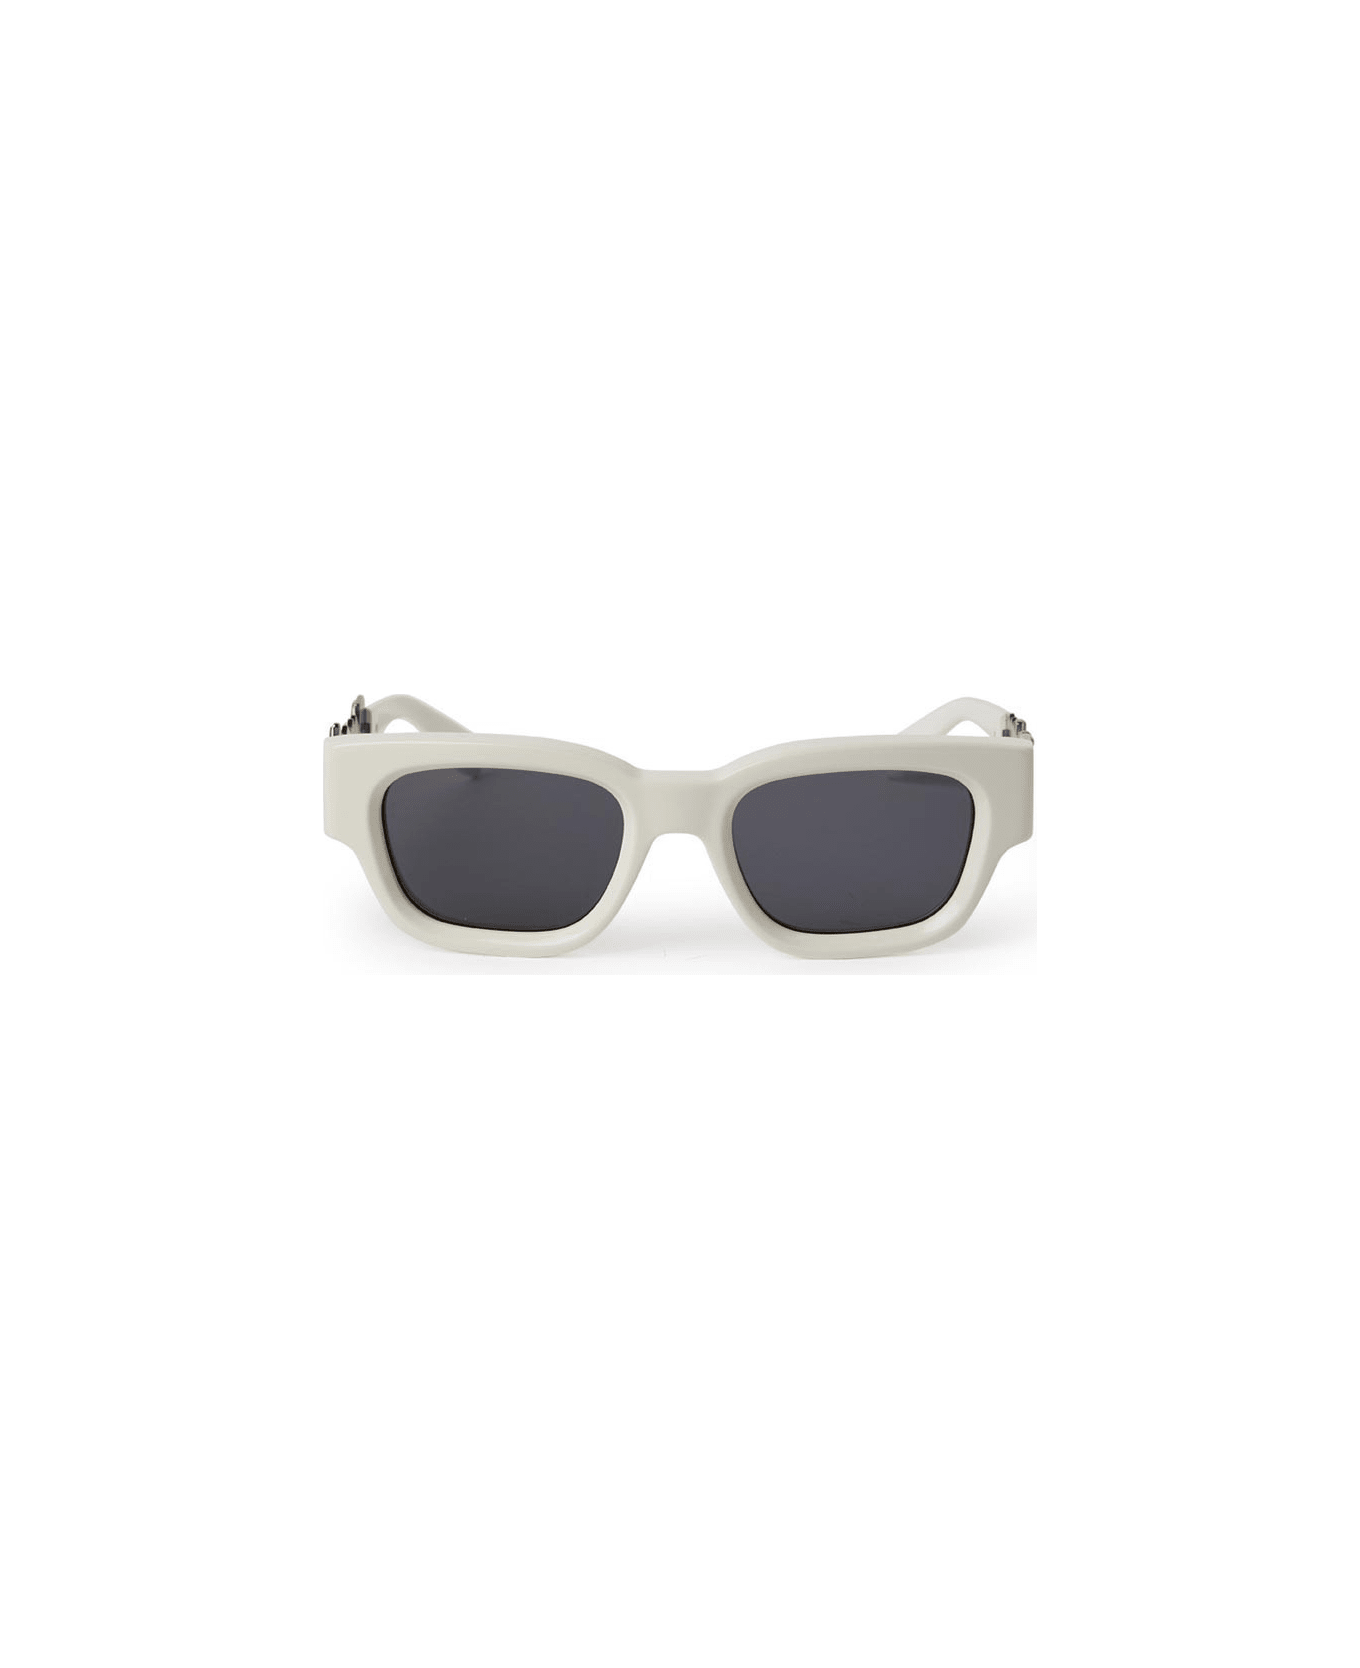 Palm Angels Sunglasses - Bianco/Grigio